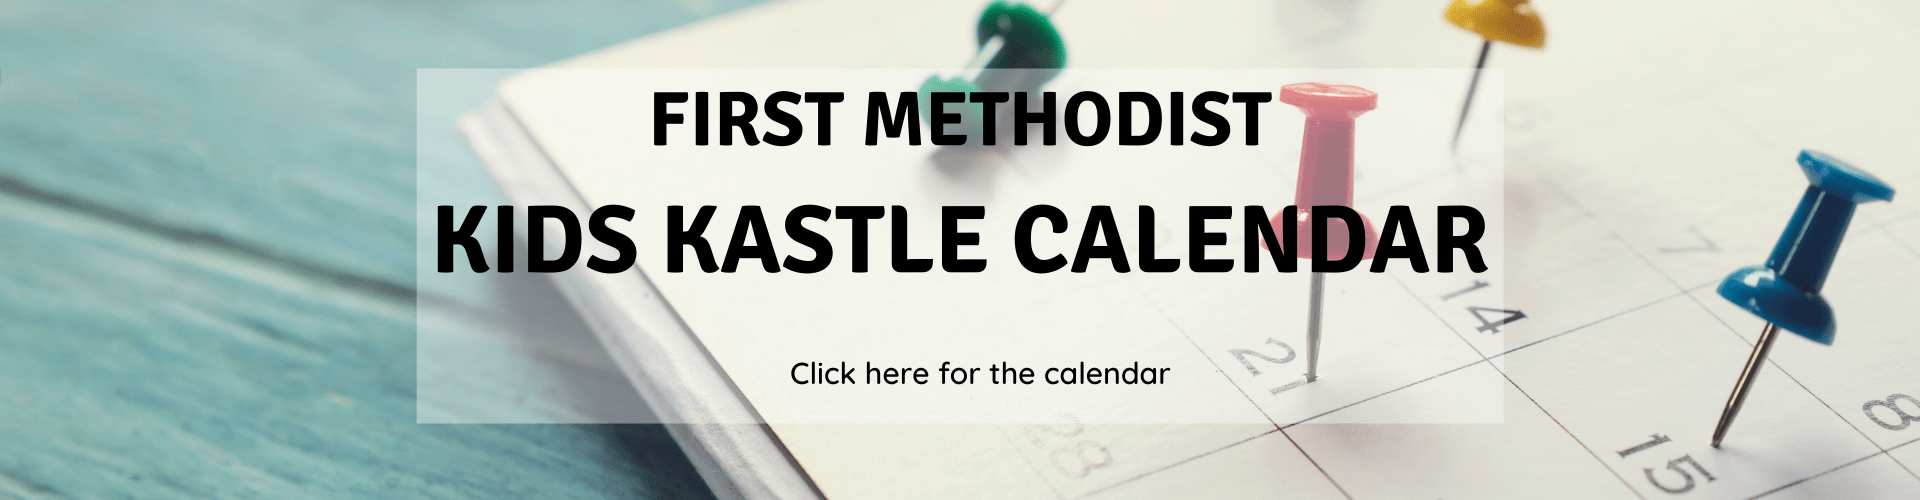 Kids Kastle Calendar 1920 x 500